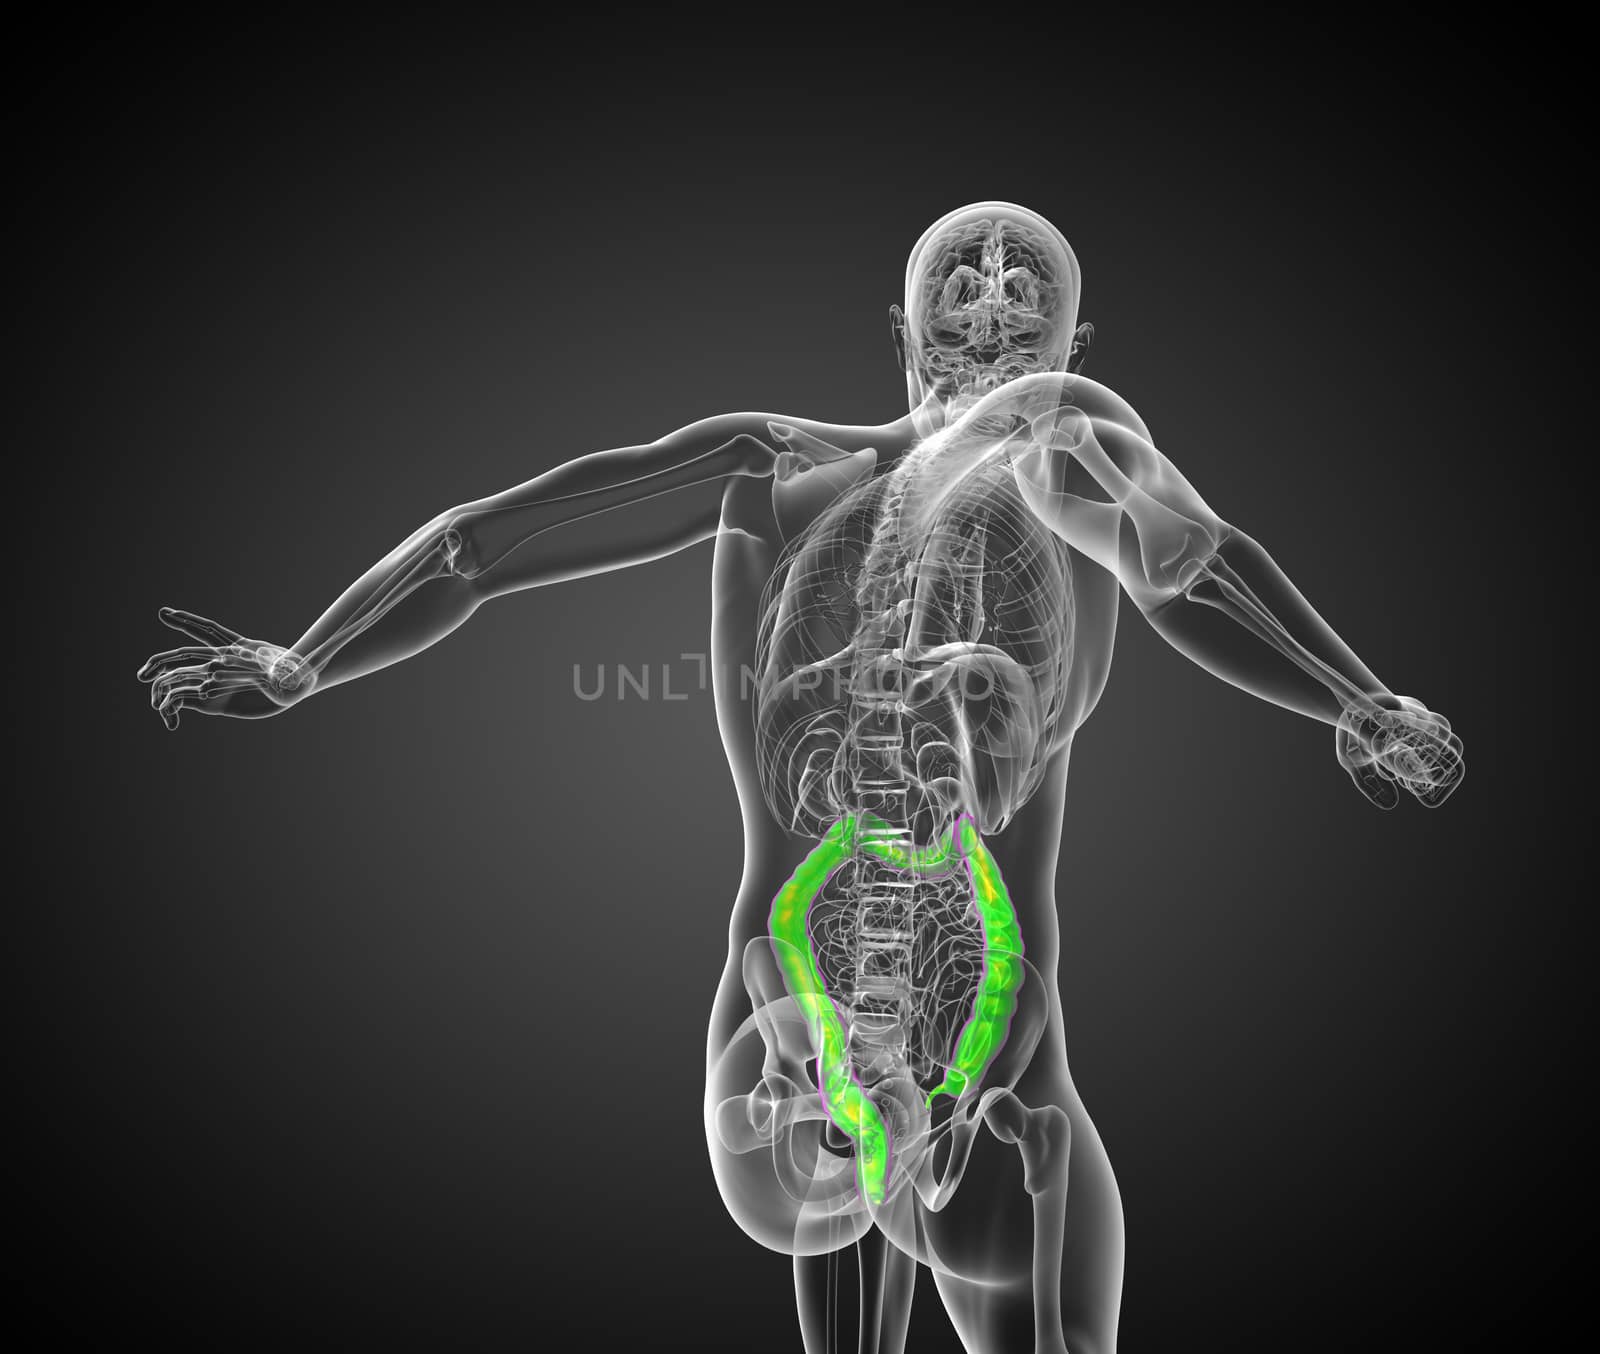 Human digestive system large intestine - back view